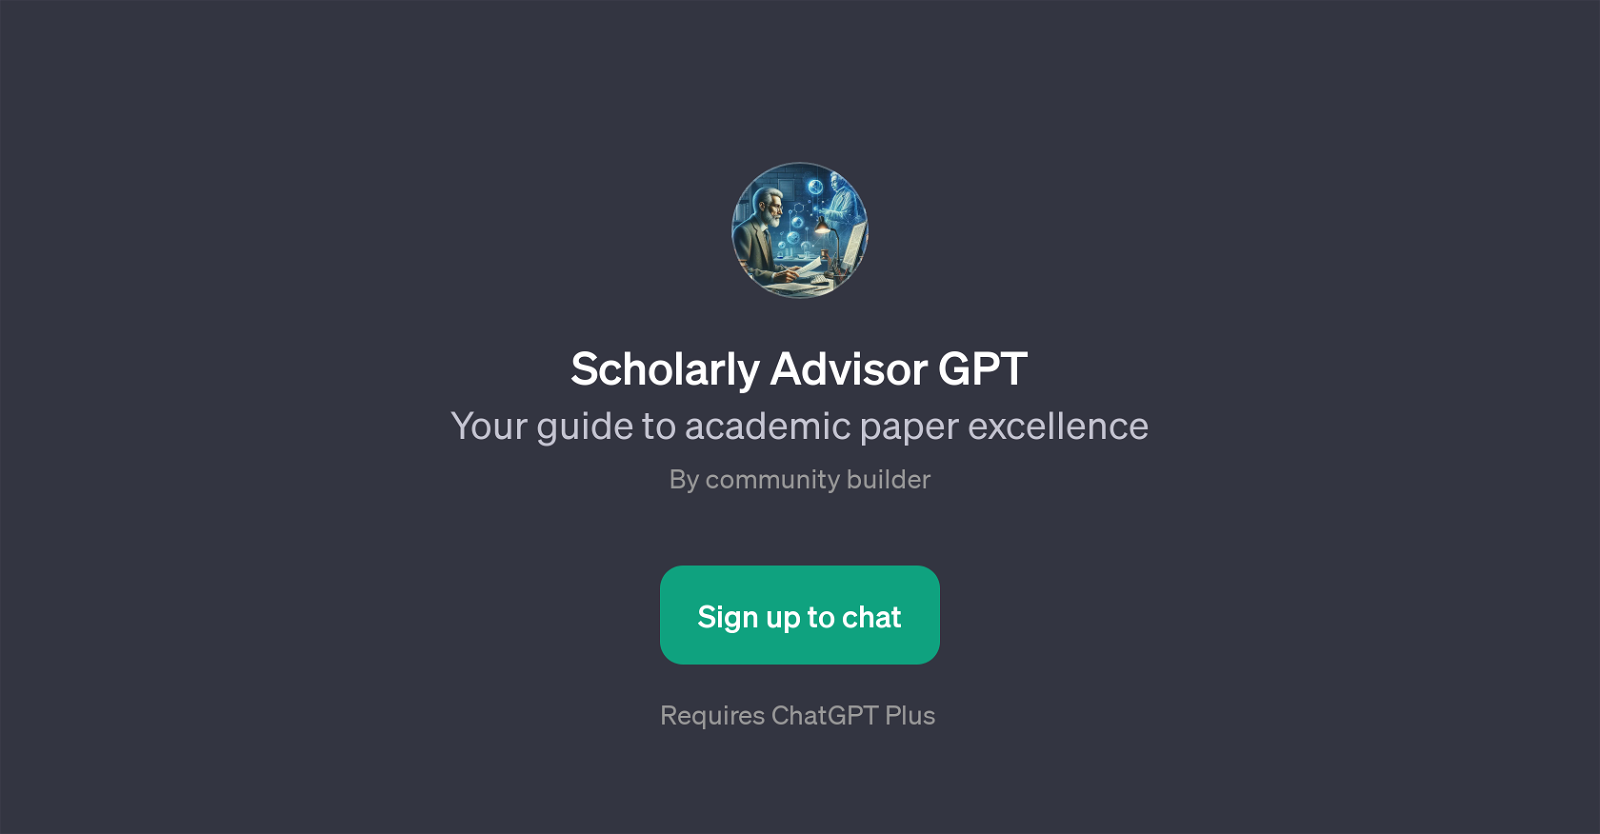 Scholarly Advisor GPT website